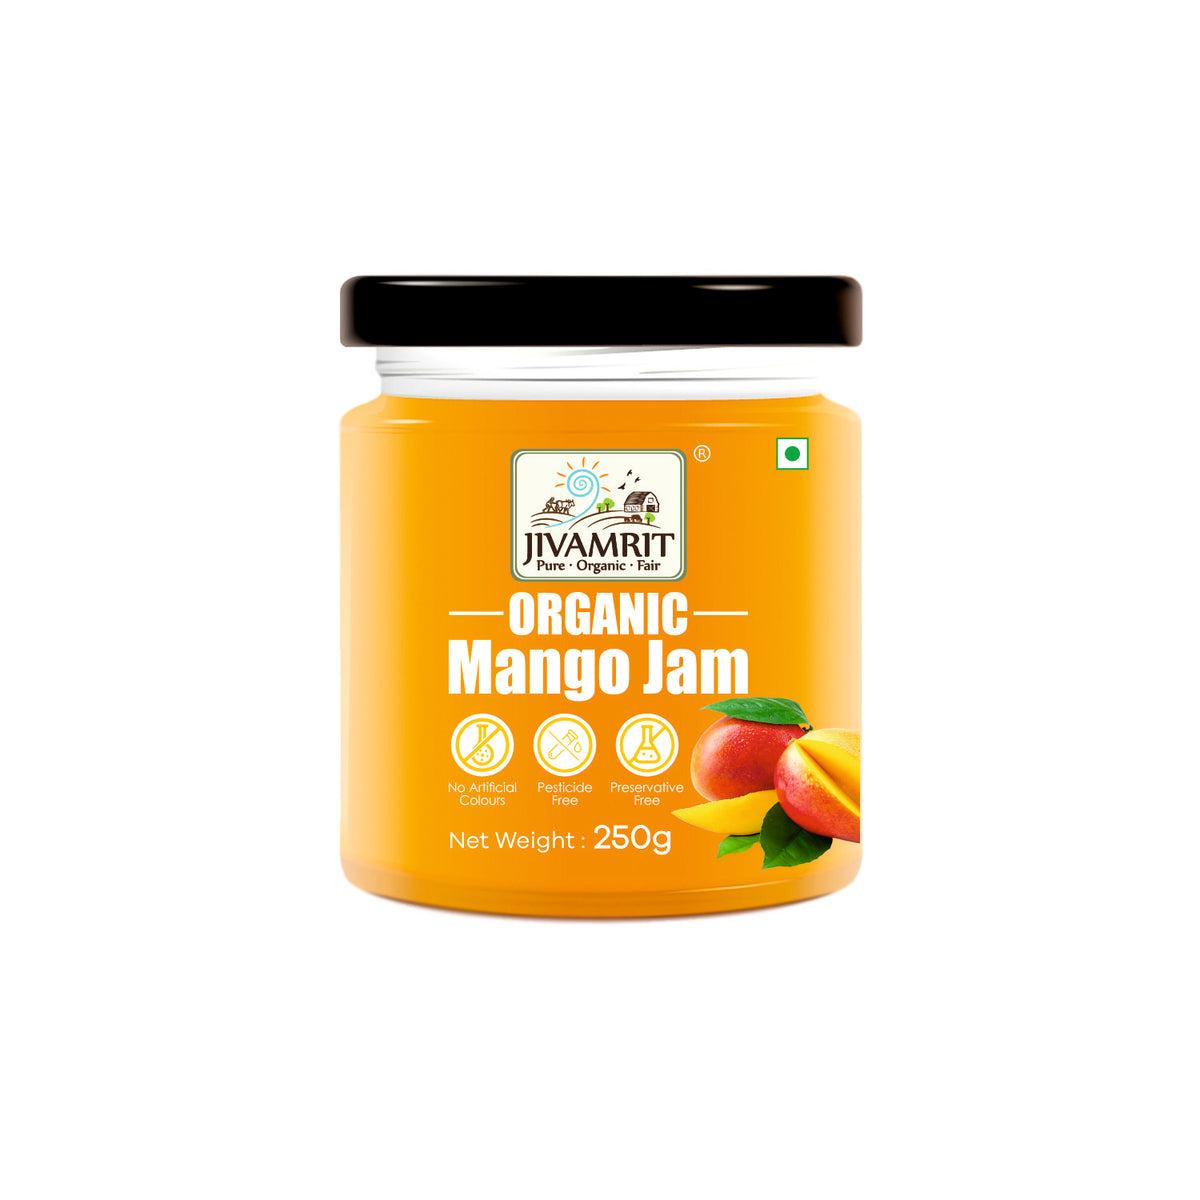 Organic Mango Jam 250g - Organic Healthy Jam